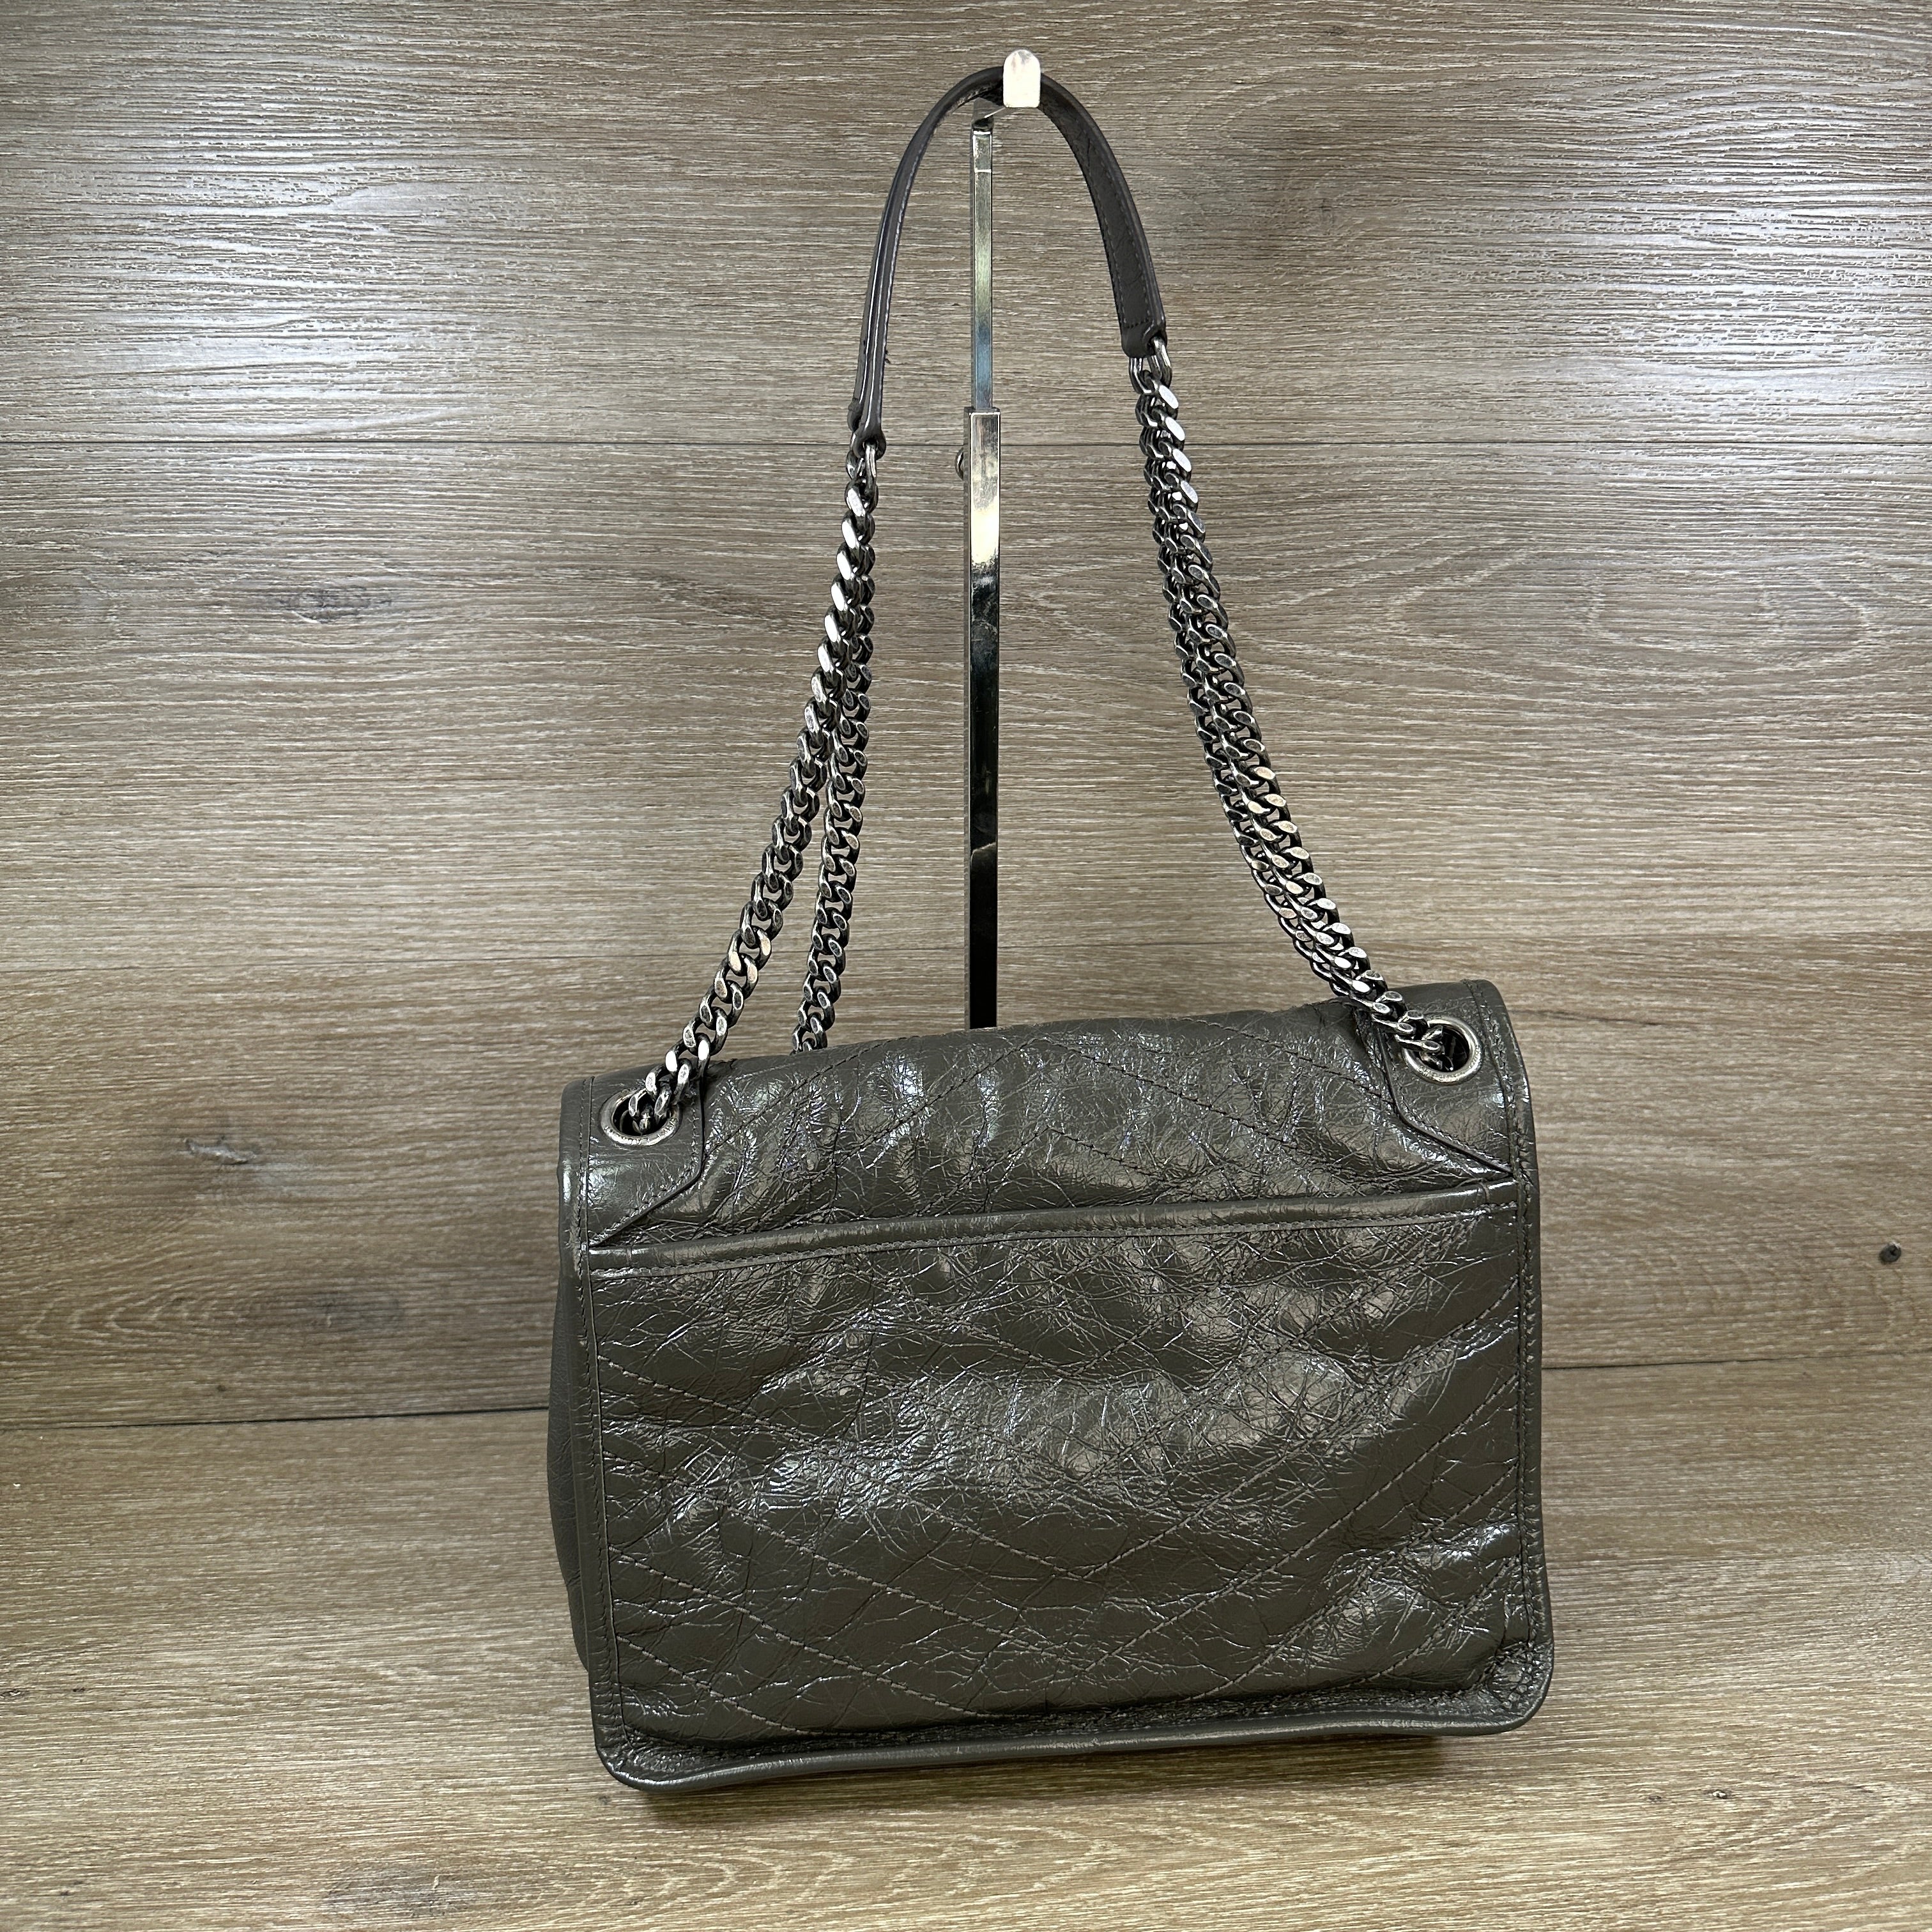 Saint Laurent Niki Medium Leather Shoulder Bag in Metallic